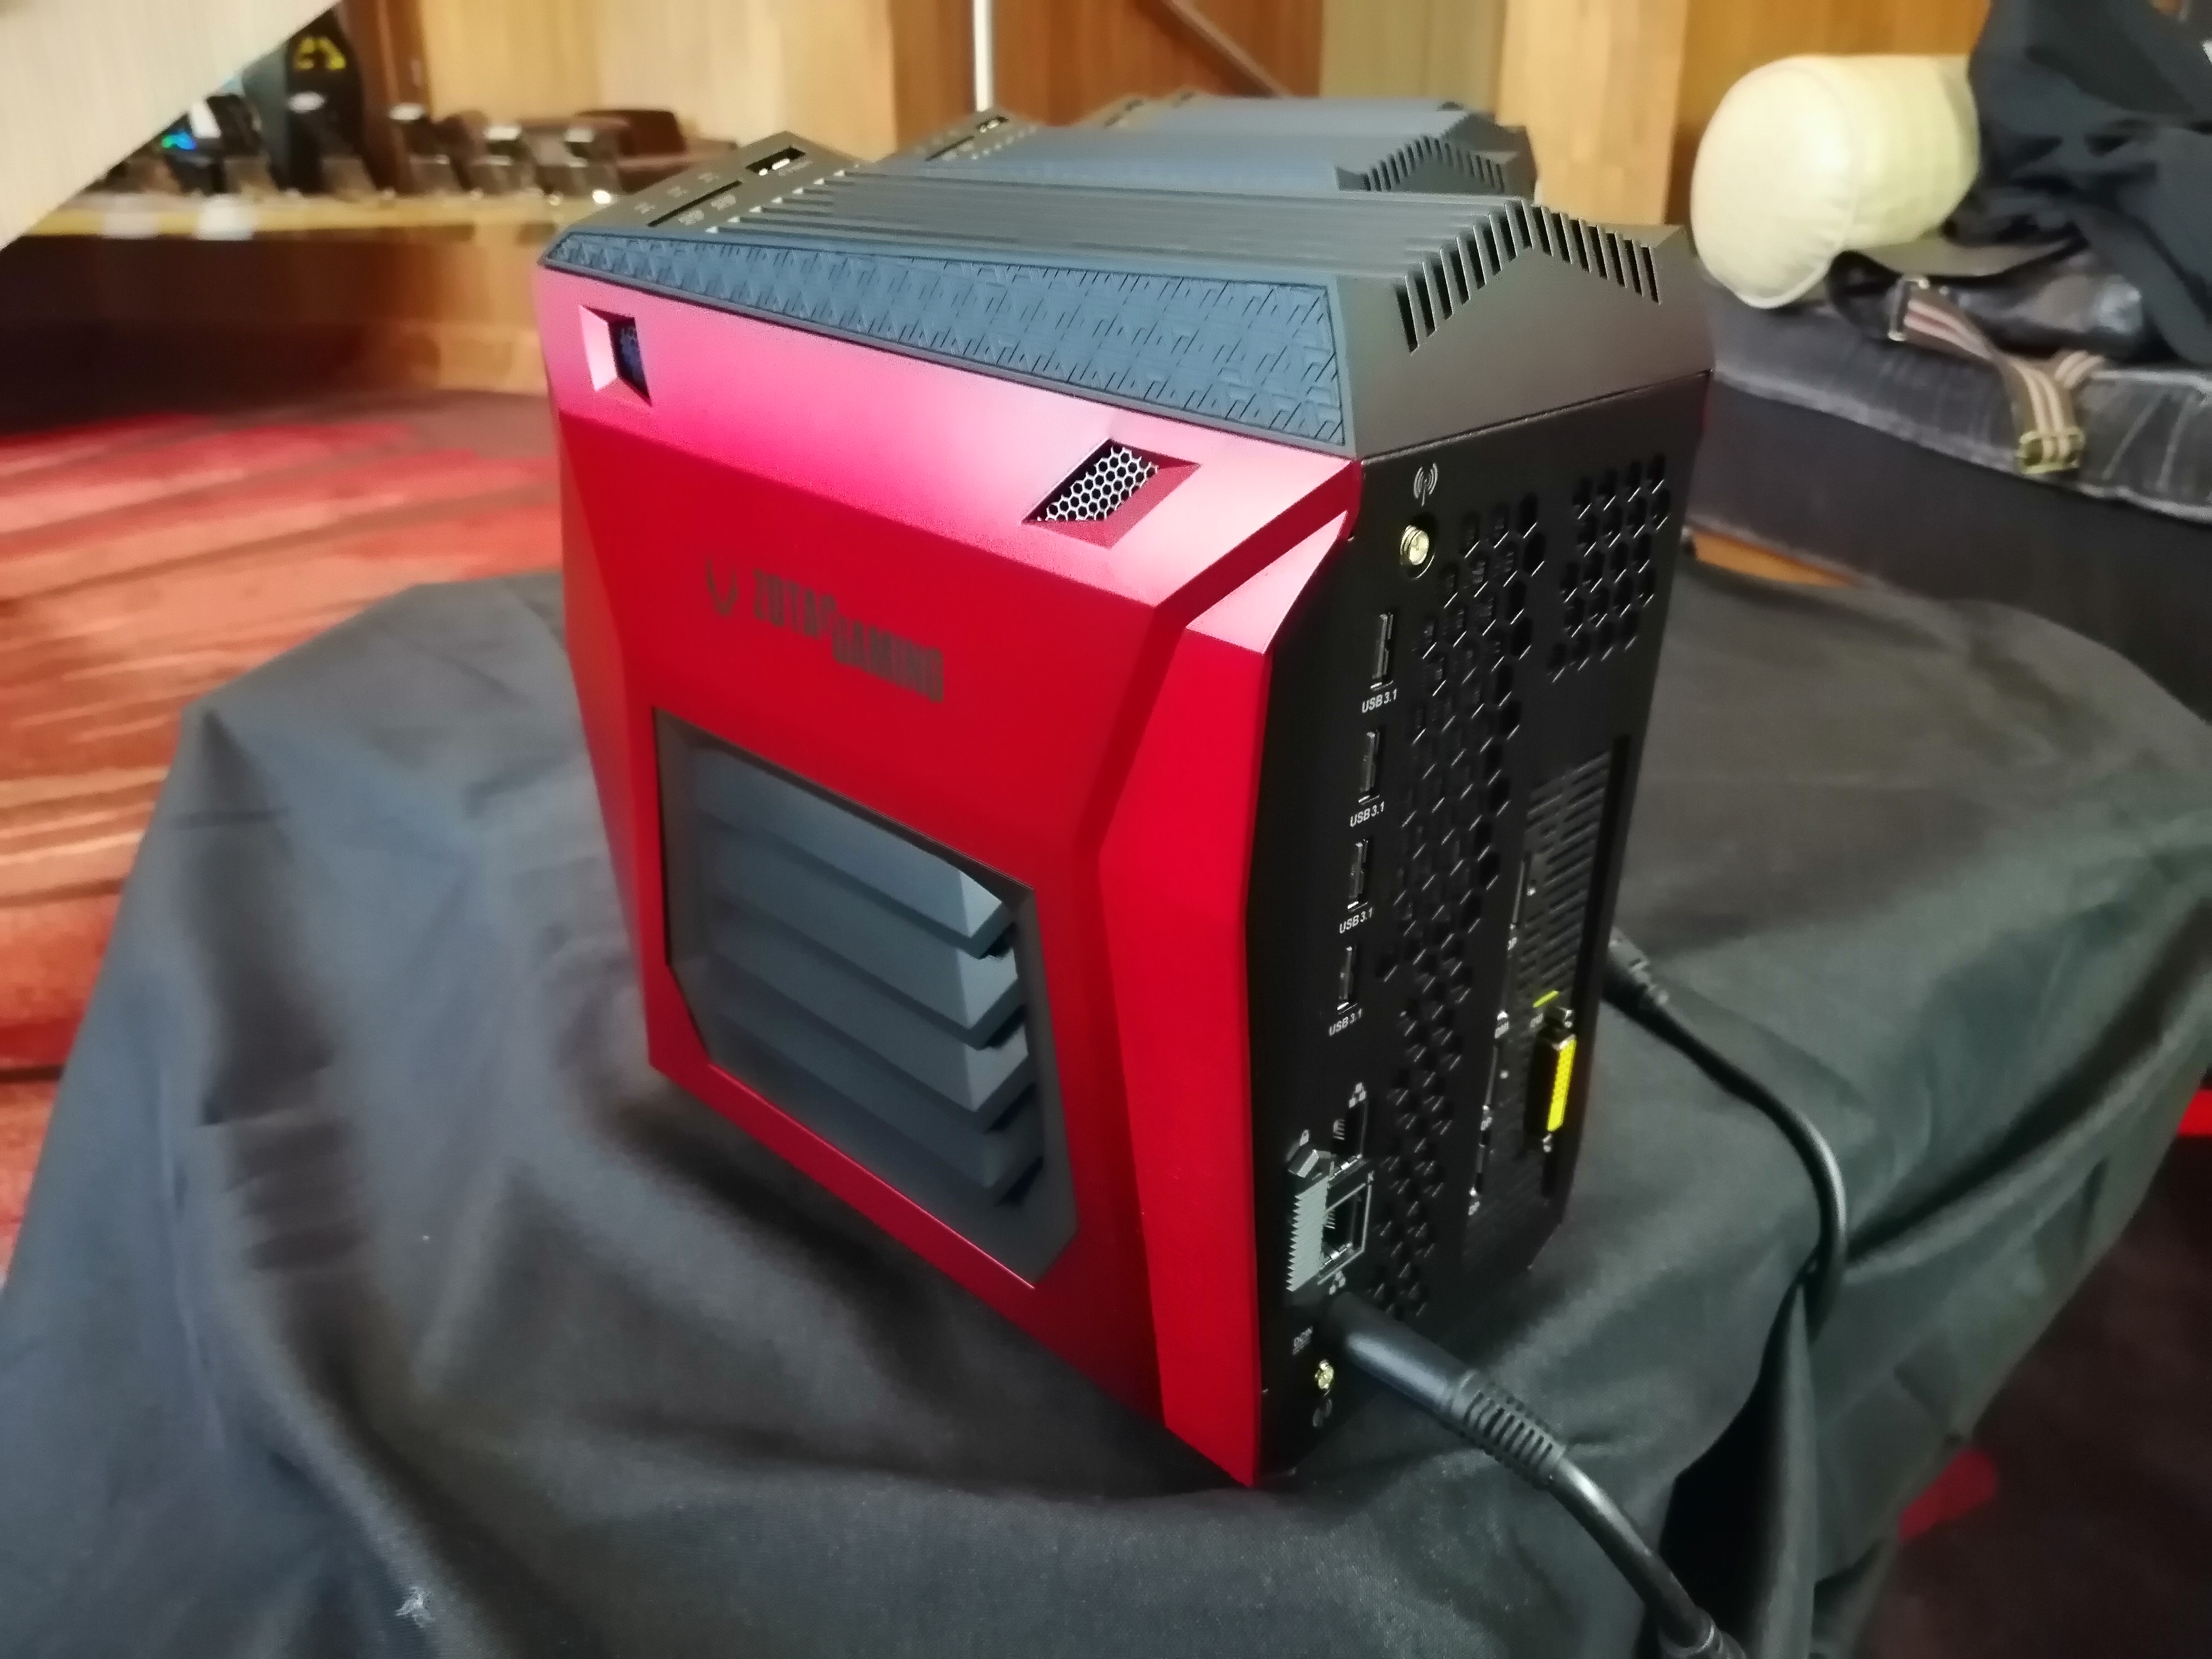 Mek Mini : le mini PC gamer de Zotac passe aux RTX Super